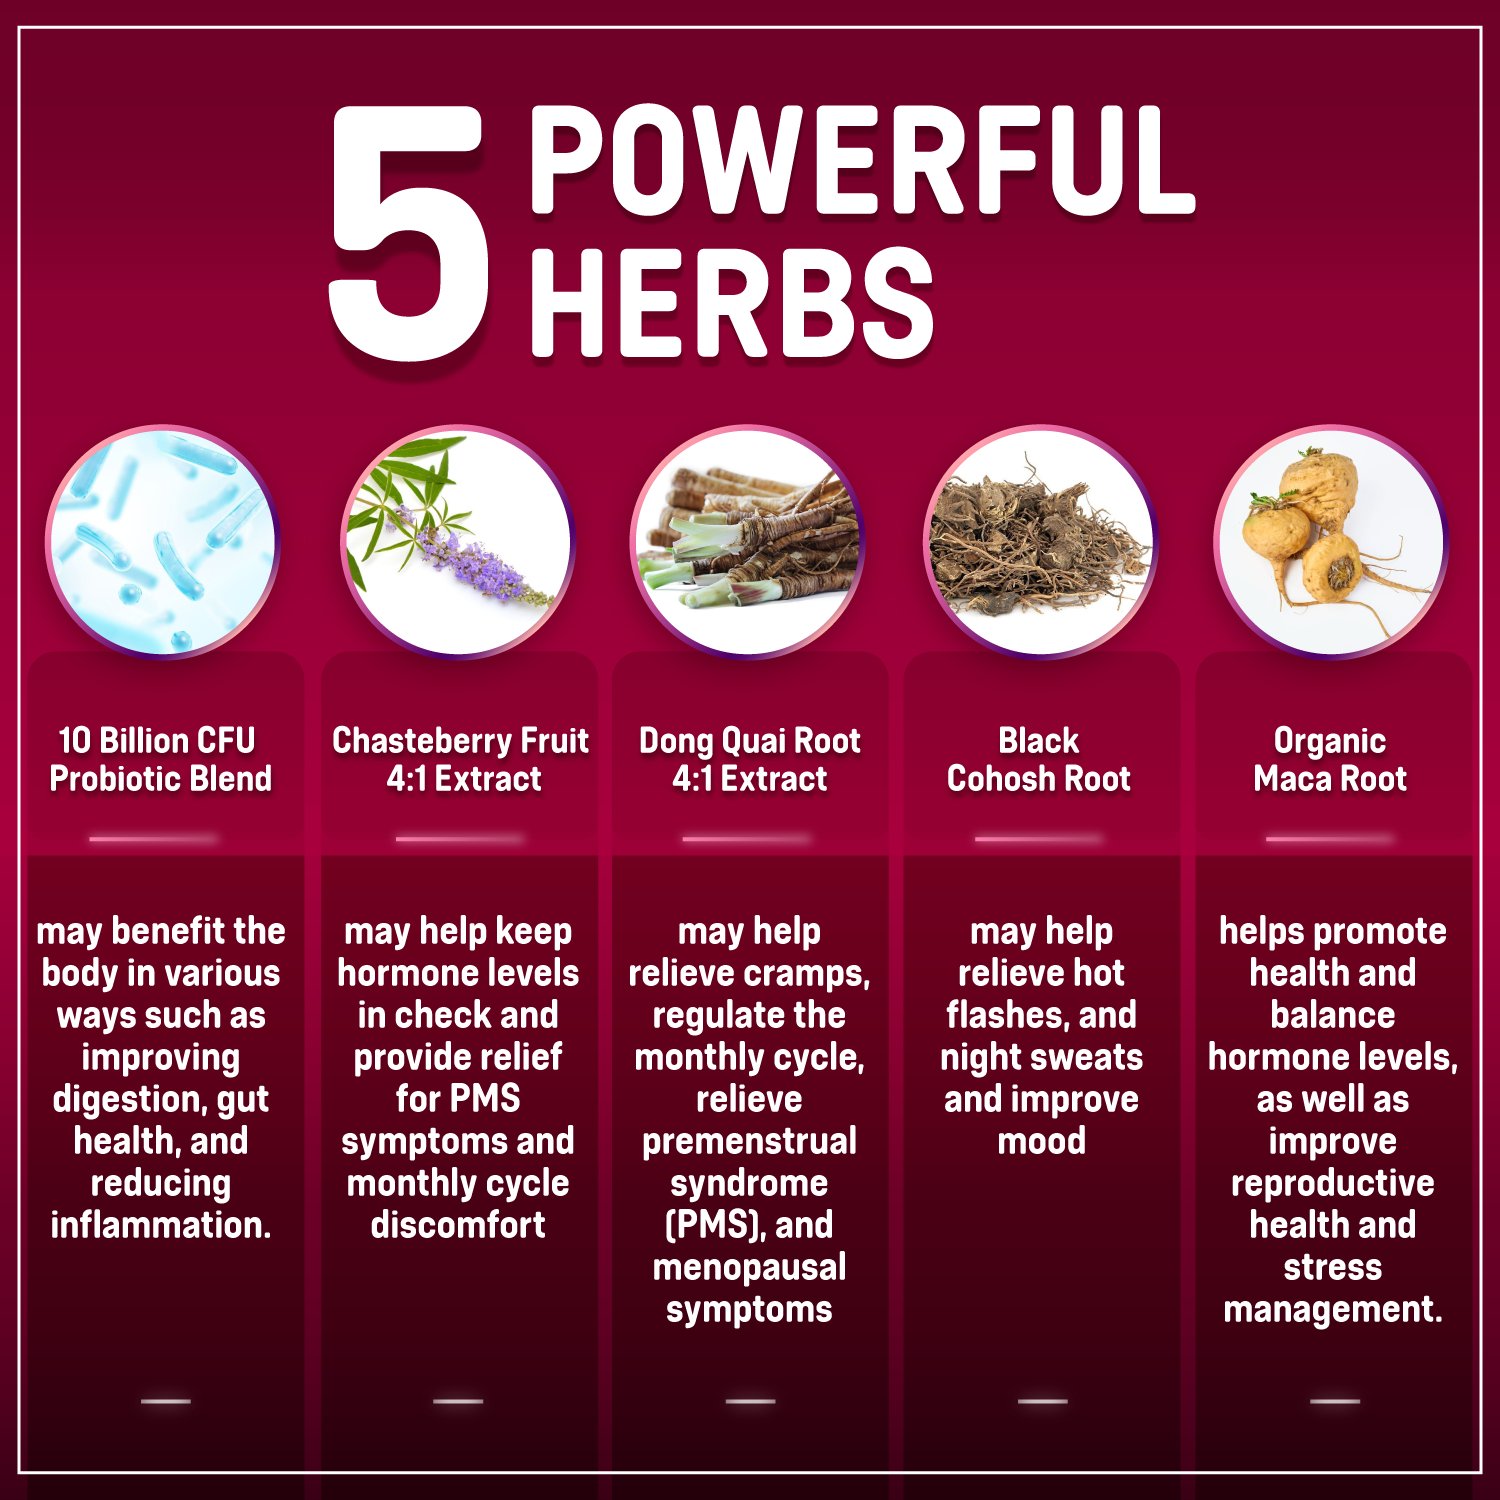 5 powerful herbs